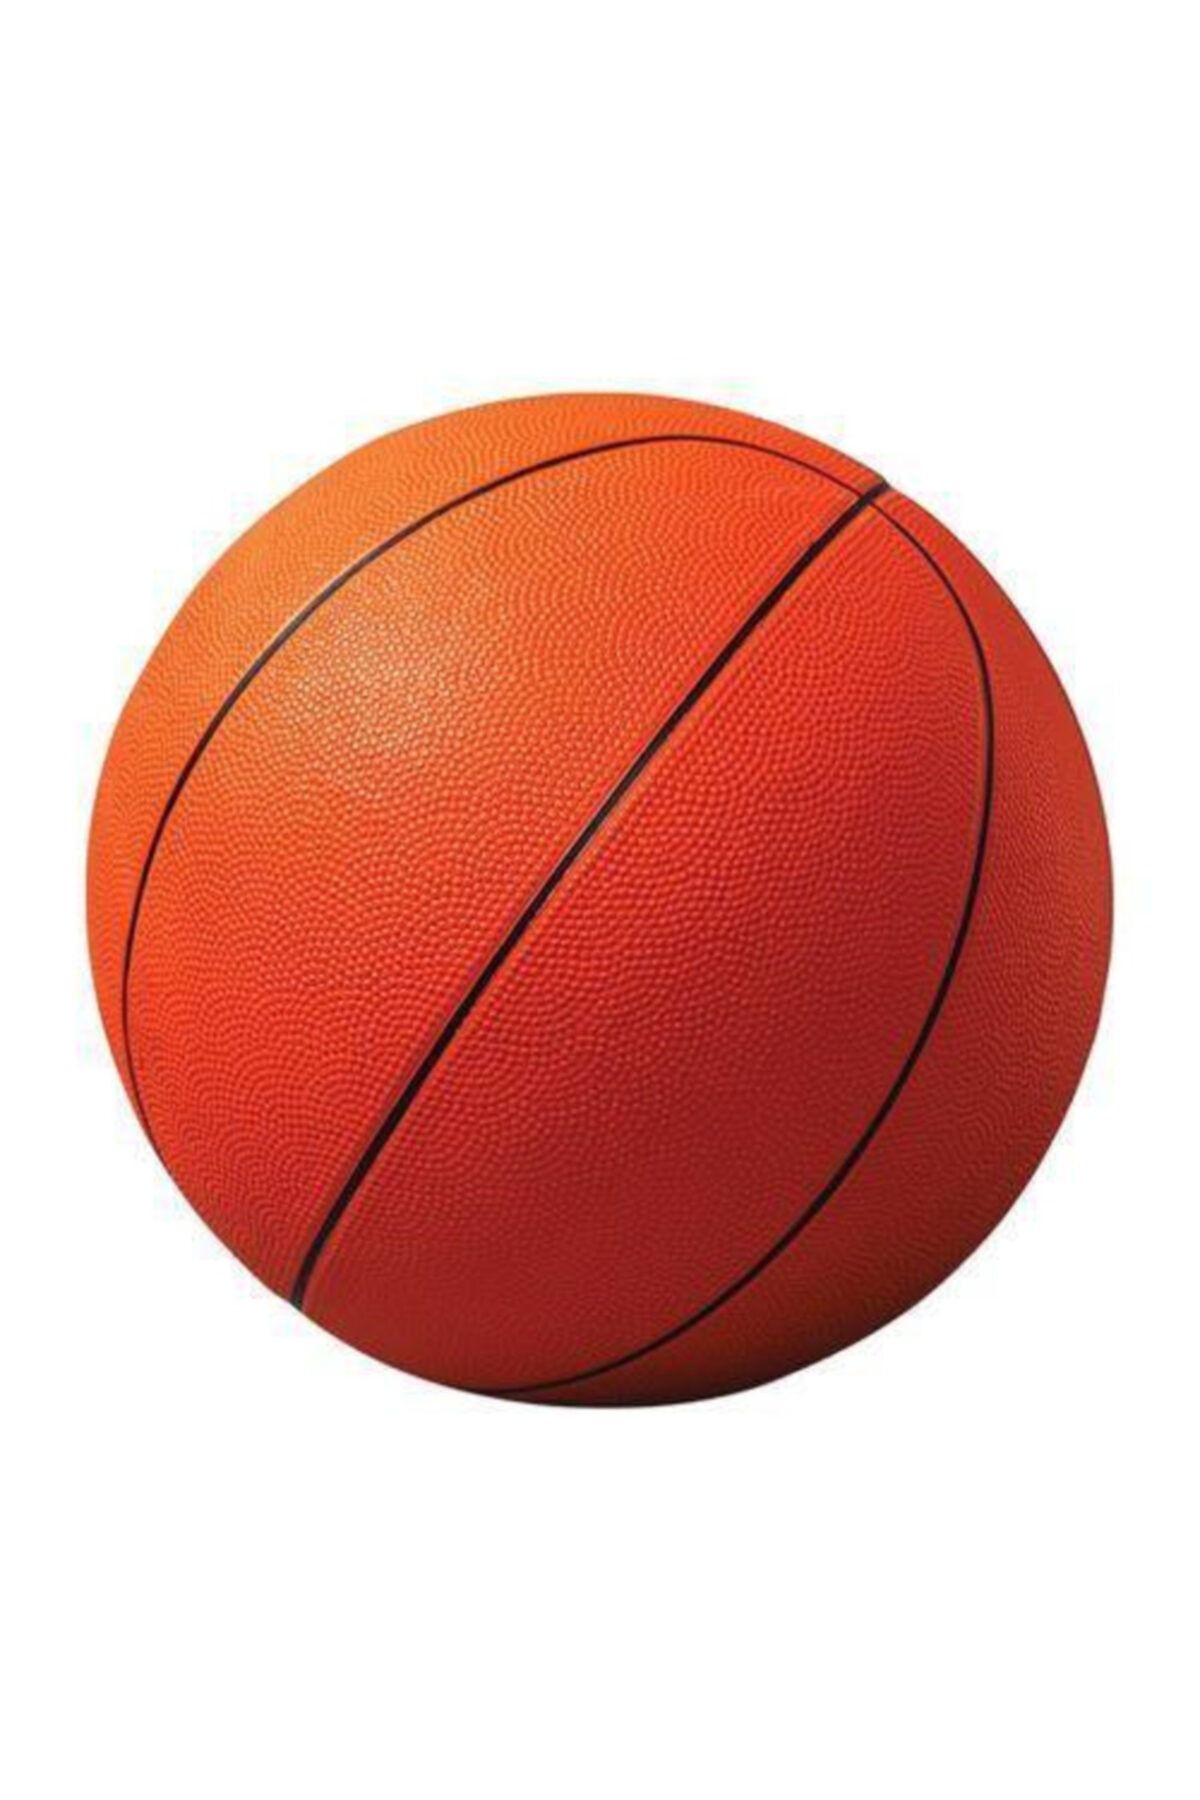 FırsatVar Kauçuk Basketbol Topu Profesyonel Boy Basketbol Oyun Topu